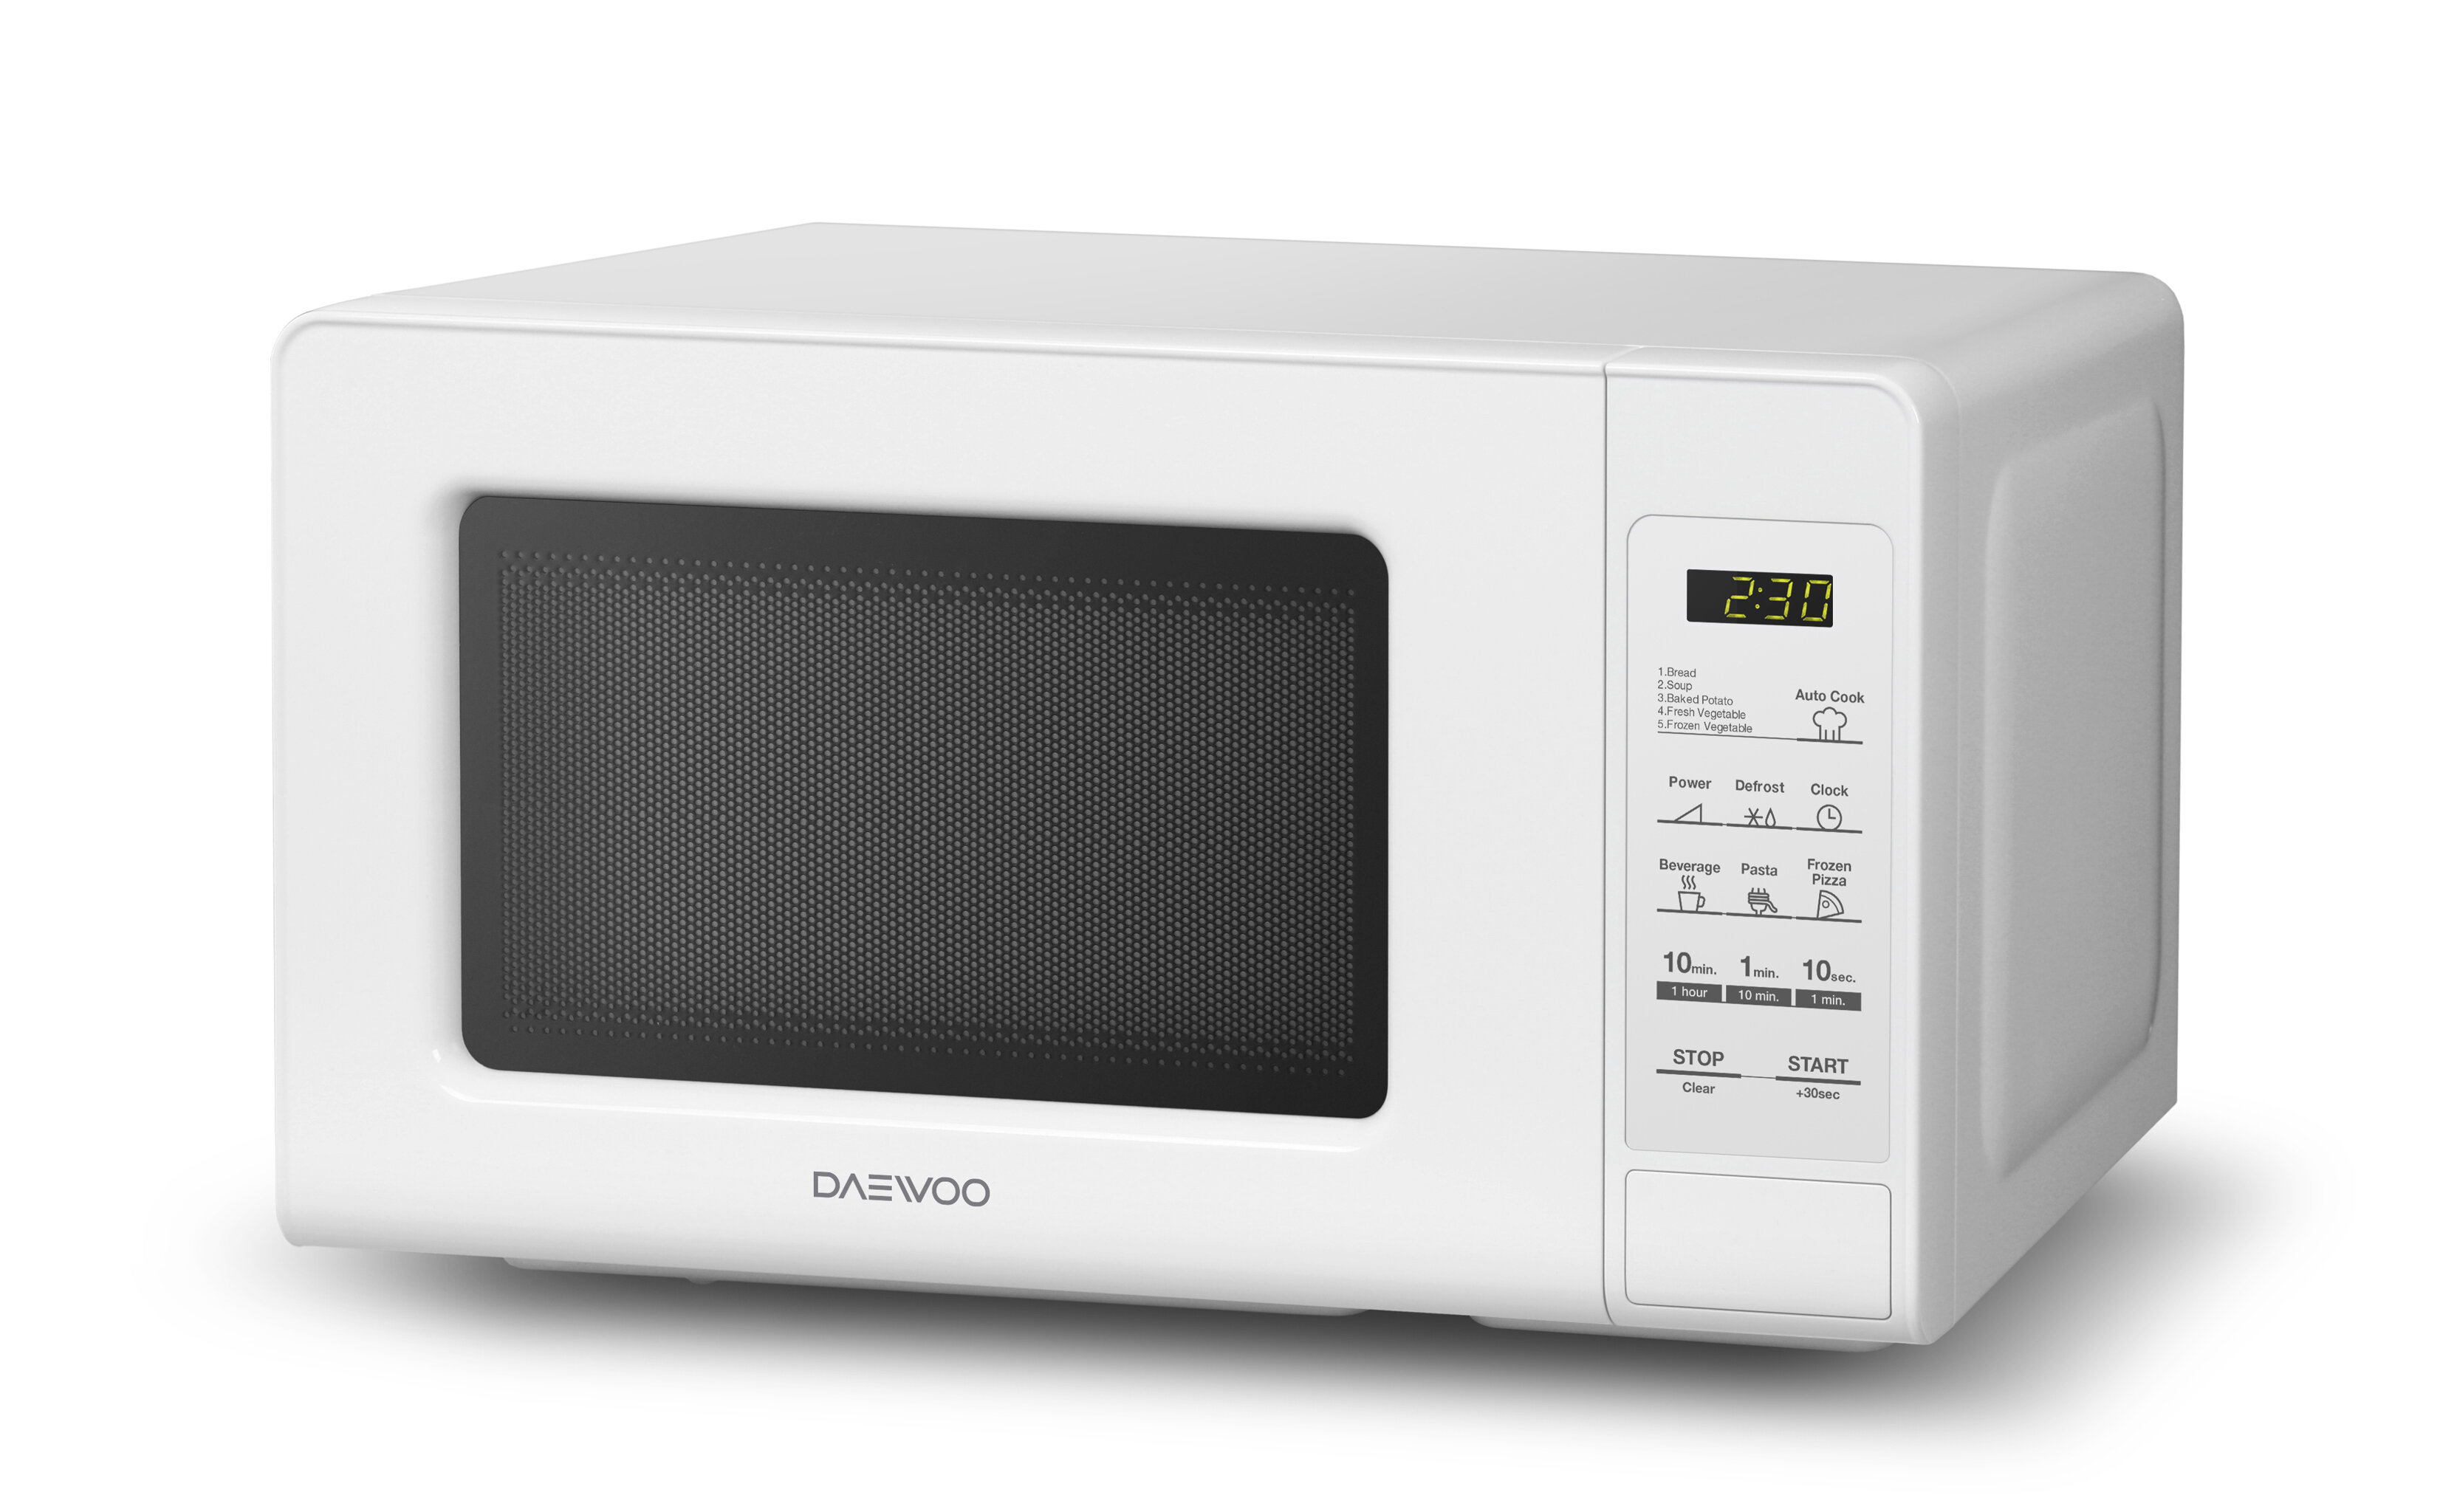 Daewoo 18 0 7 Cu Ft Countertop Microwave Reviews Wayfair